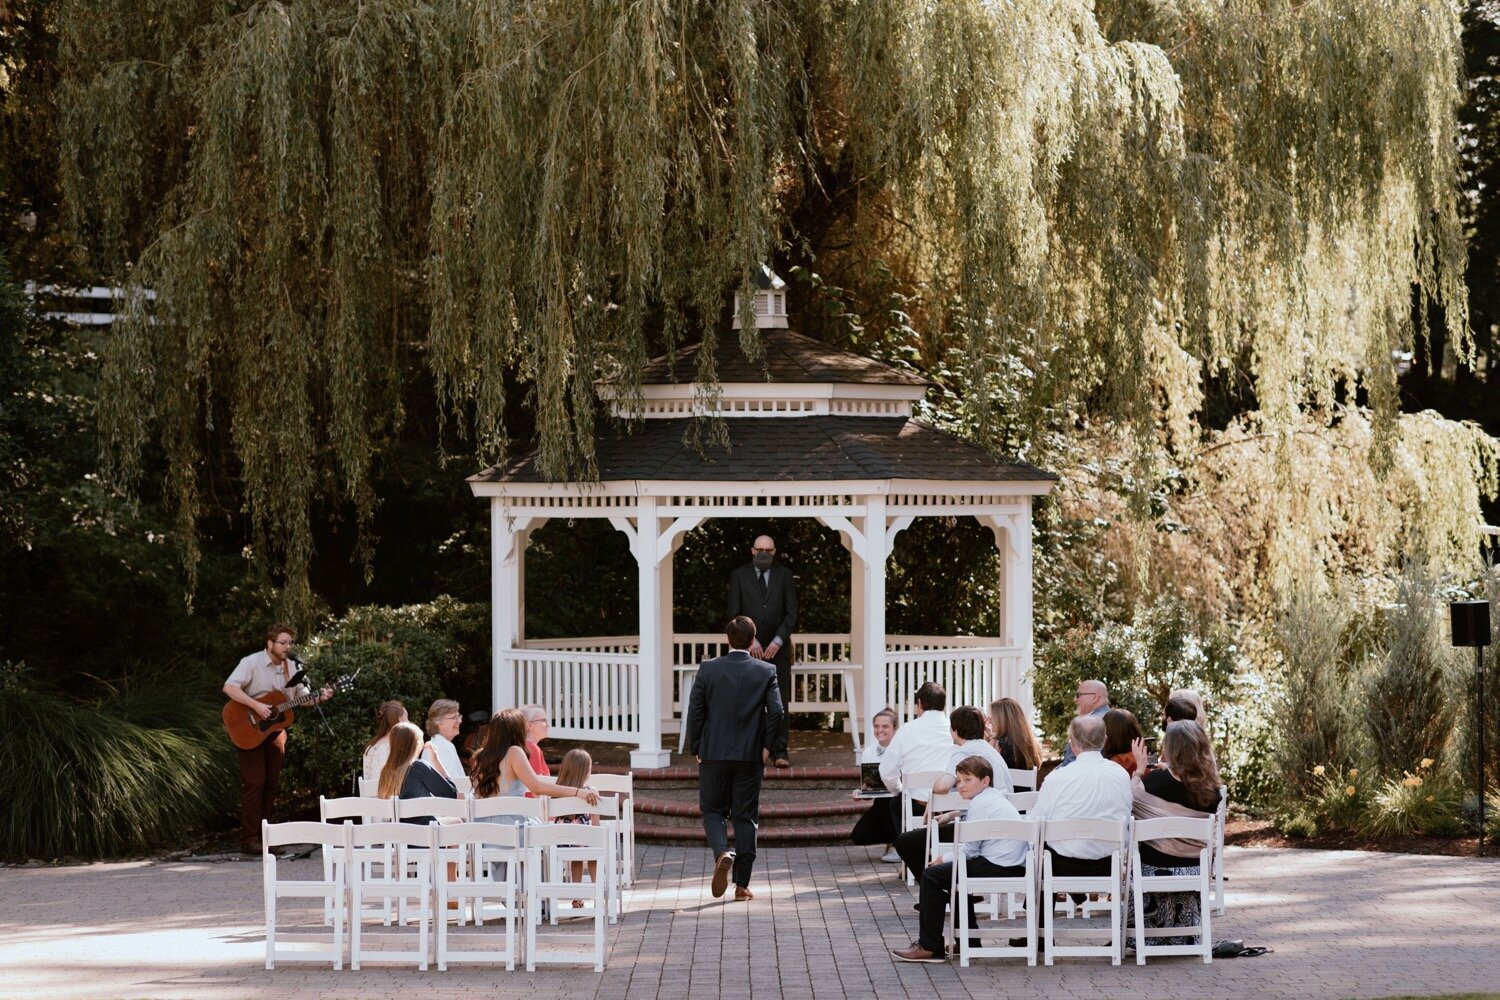 Amalie and Conner's Lush Garden Wedding at Portland's Abernethy Center with a Cozy Backyard Reception | Oregon Wedding Photographer